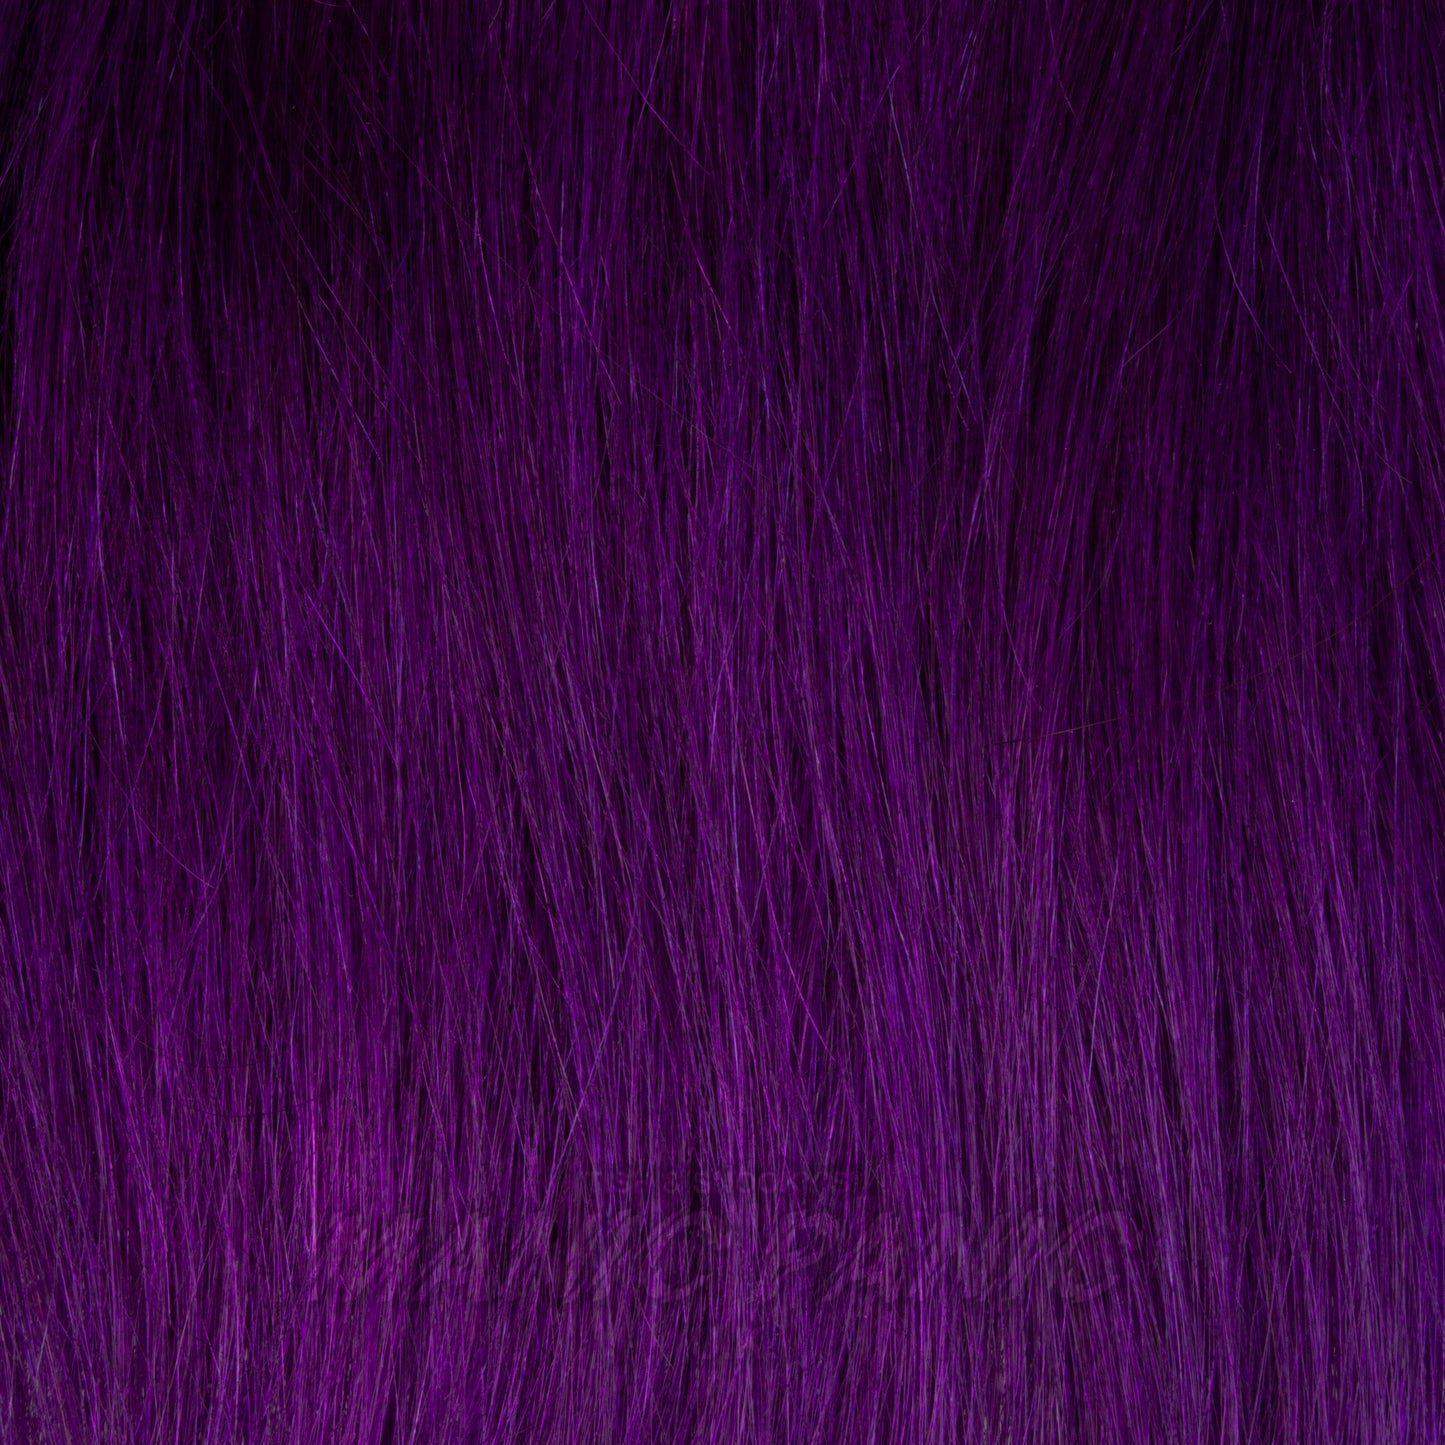 Manic Panic Classic Cream Hair Colour - Purple Haze - Kate's Clothing